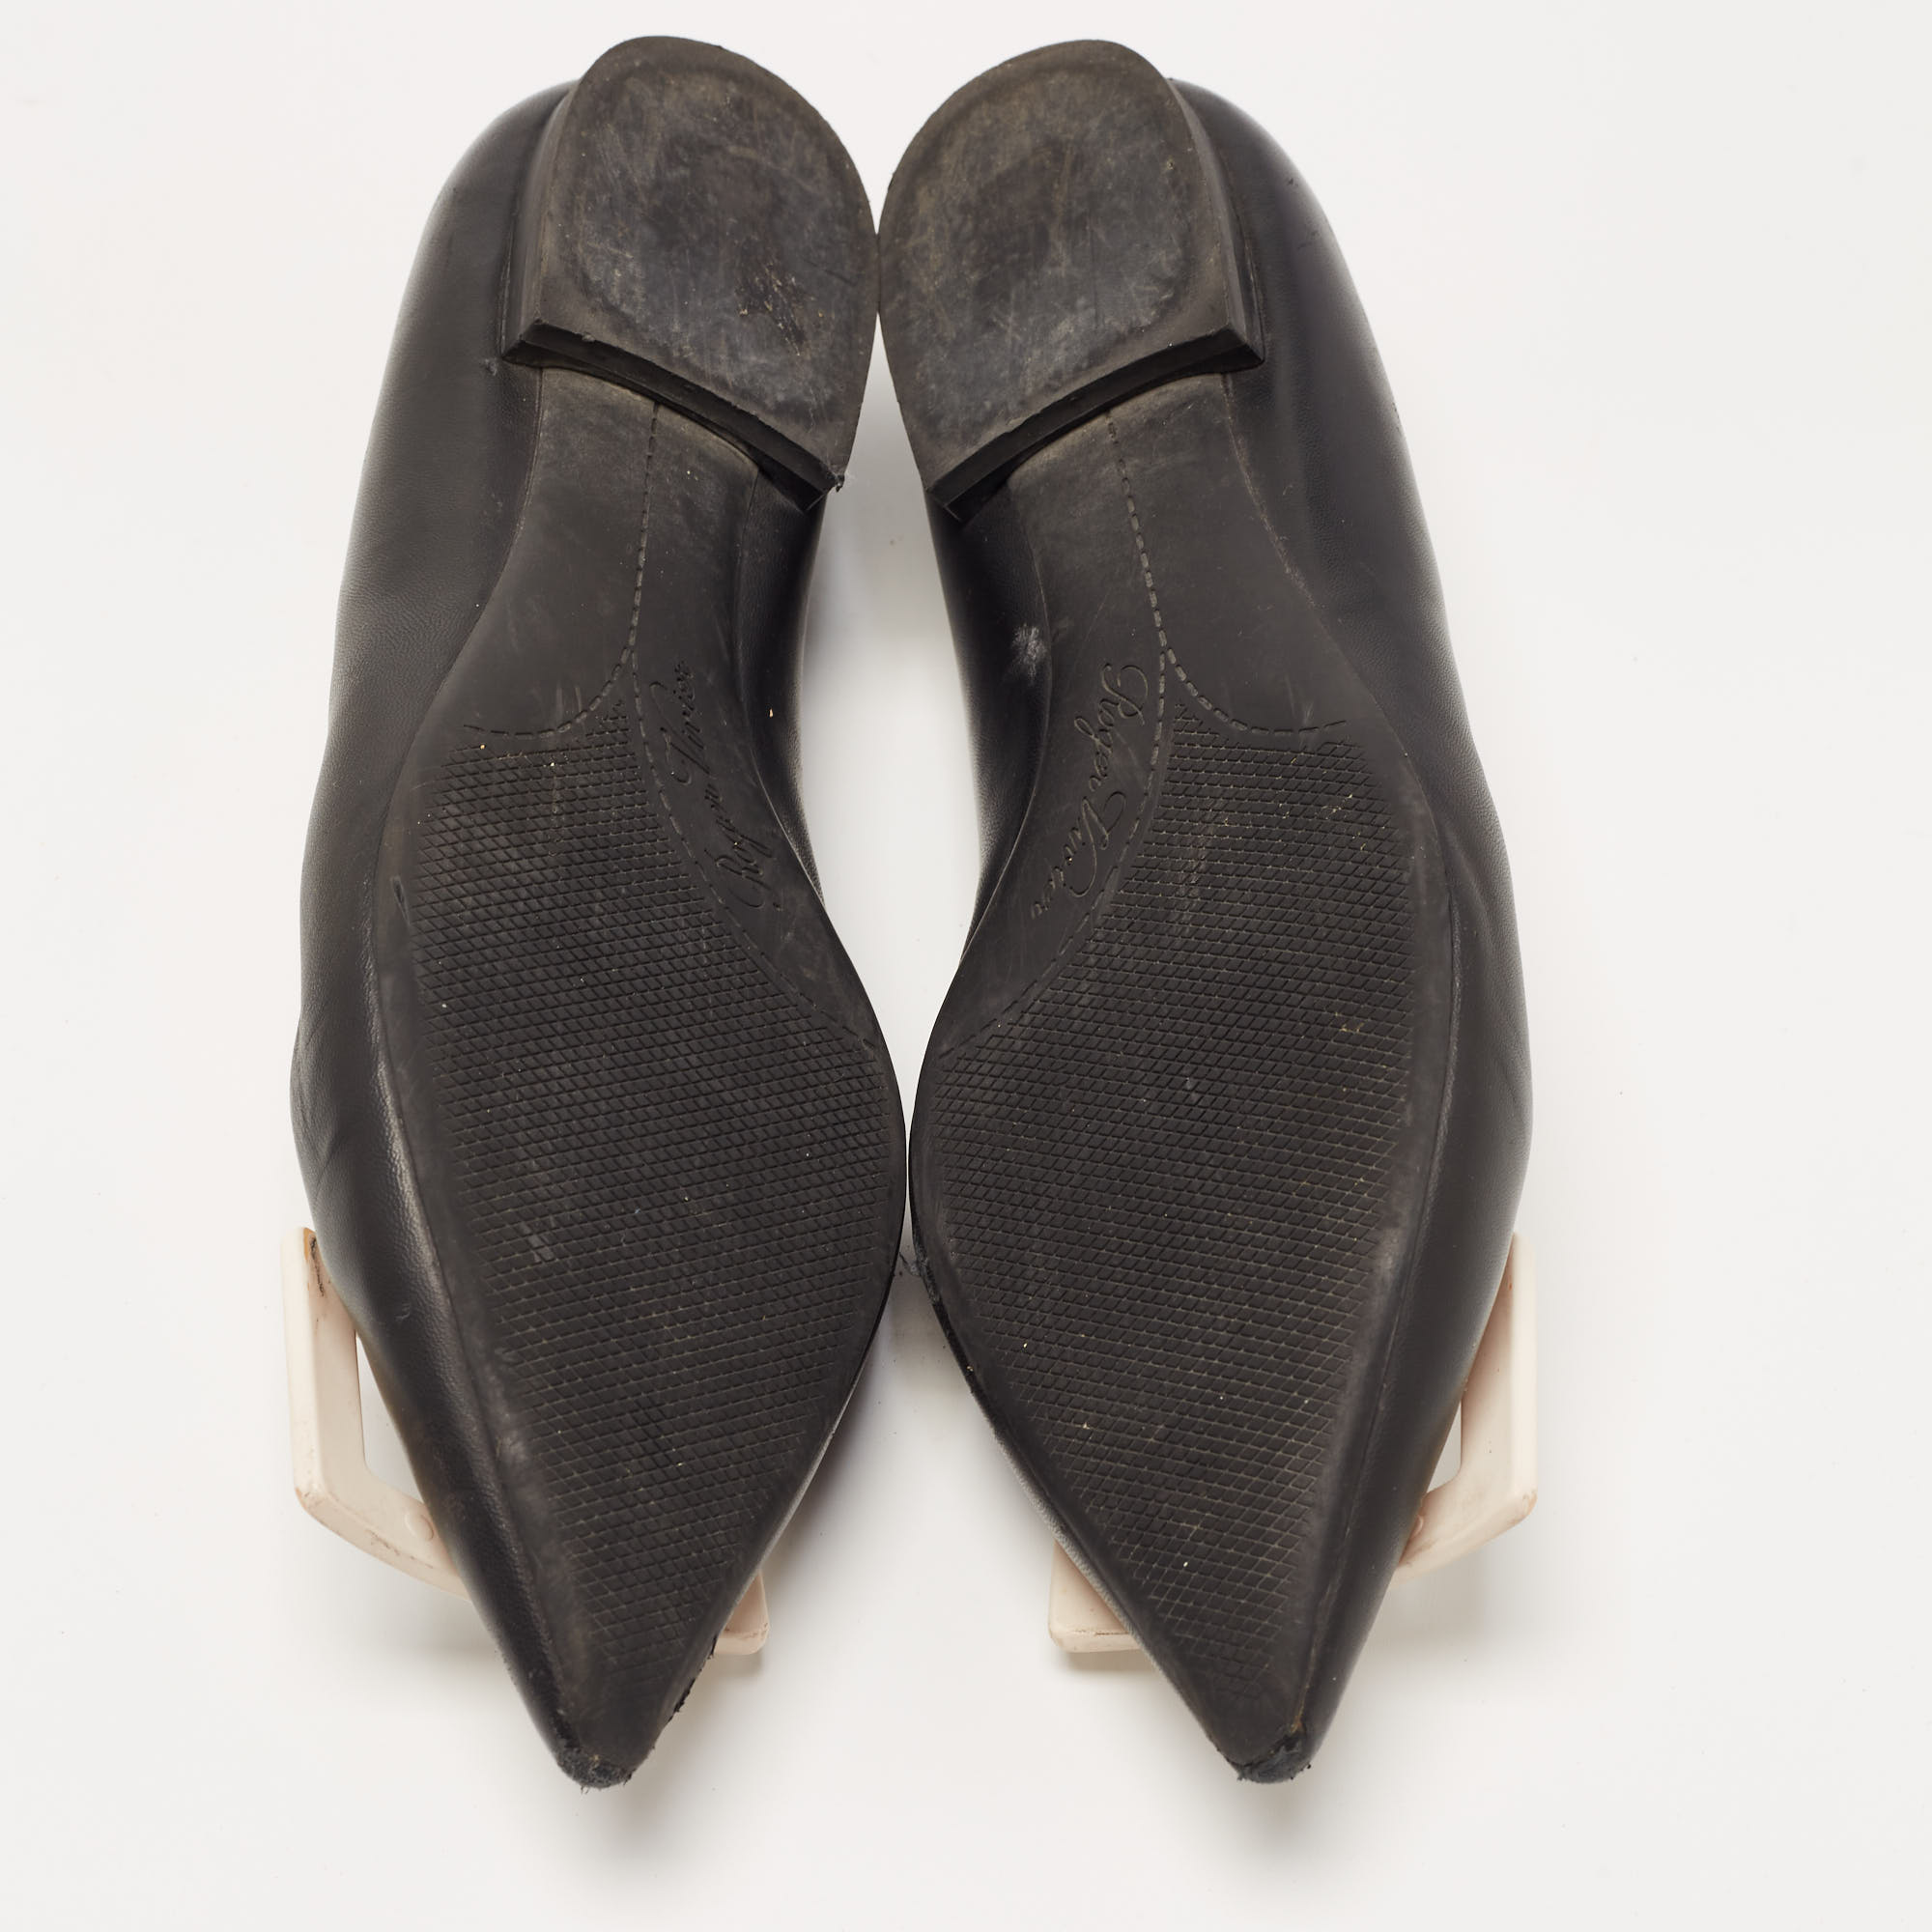 Roger Vivier Black Leather Gommette Ballet Flats Size 37